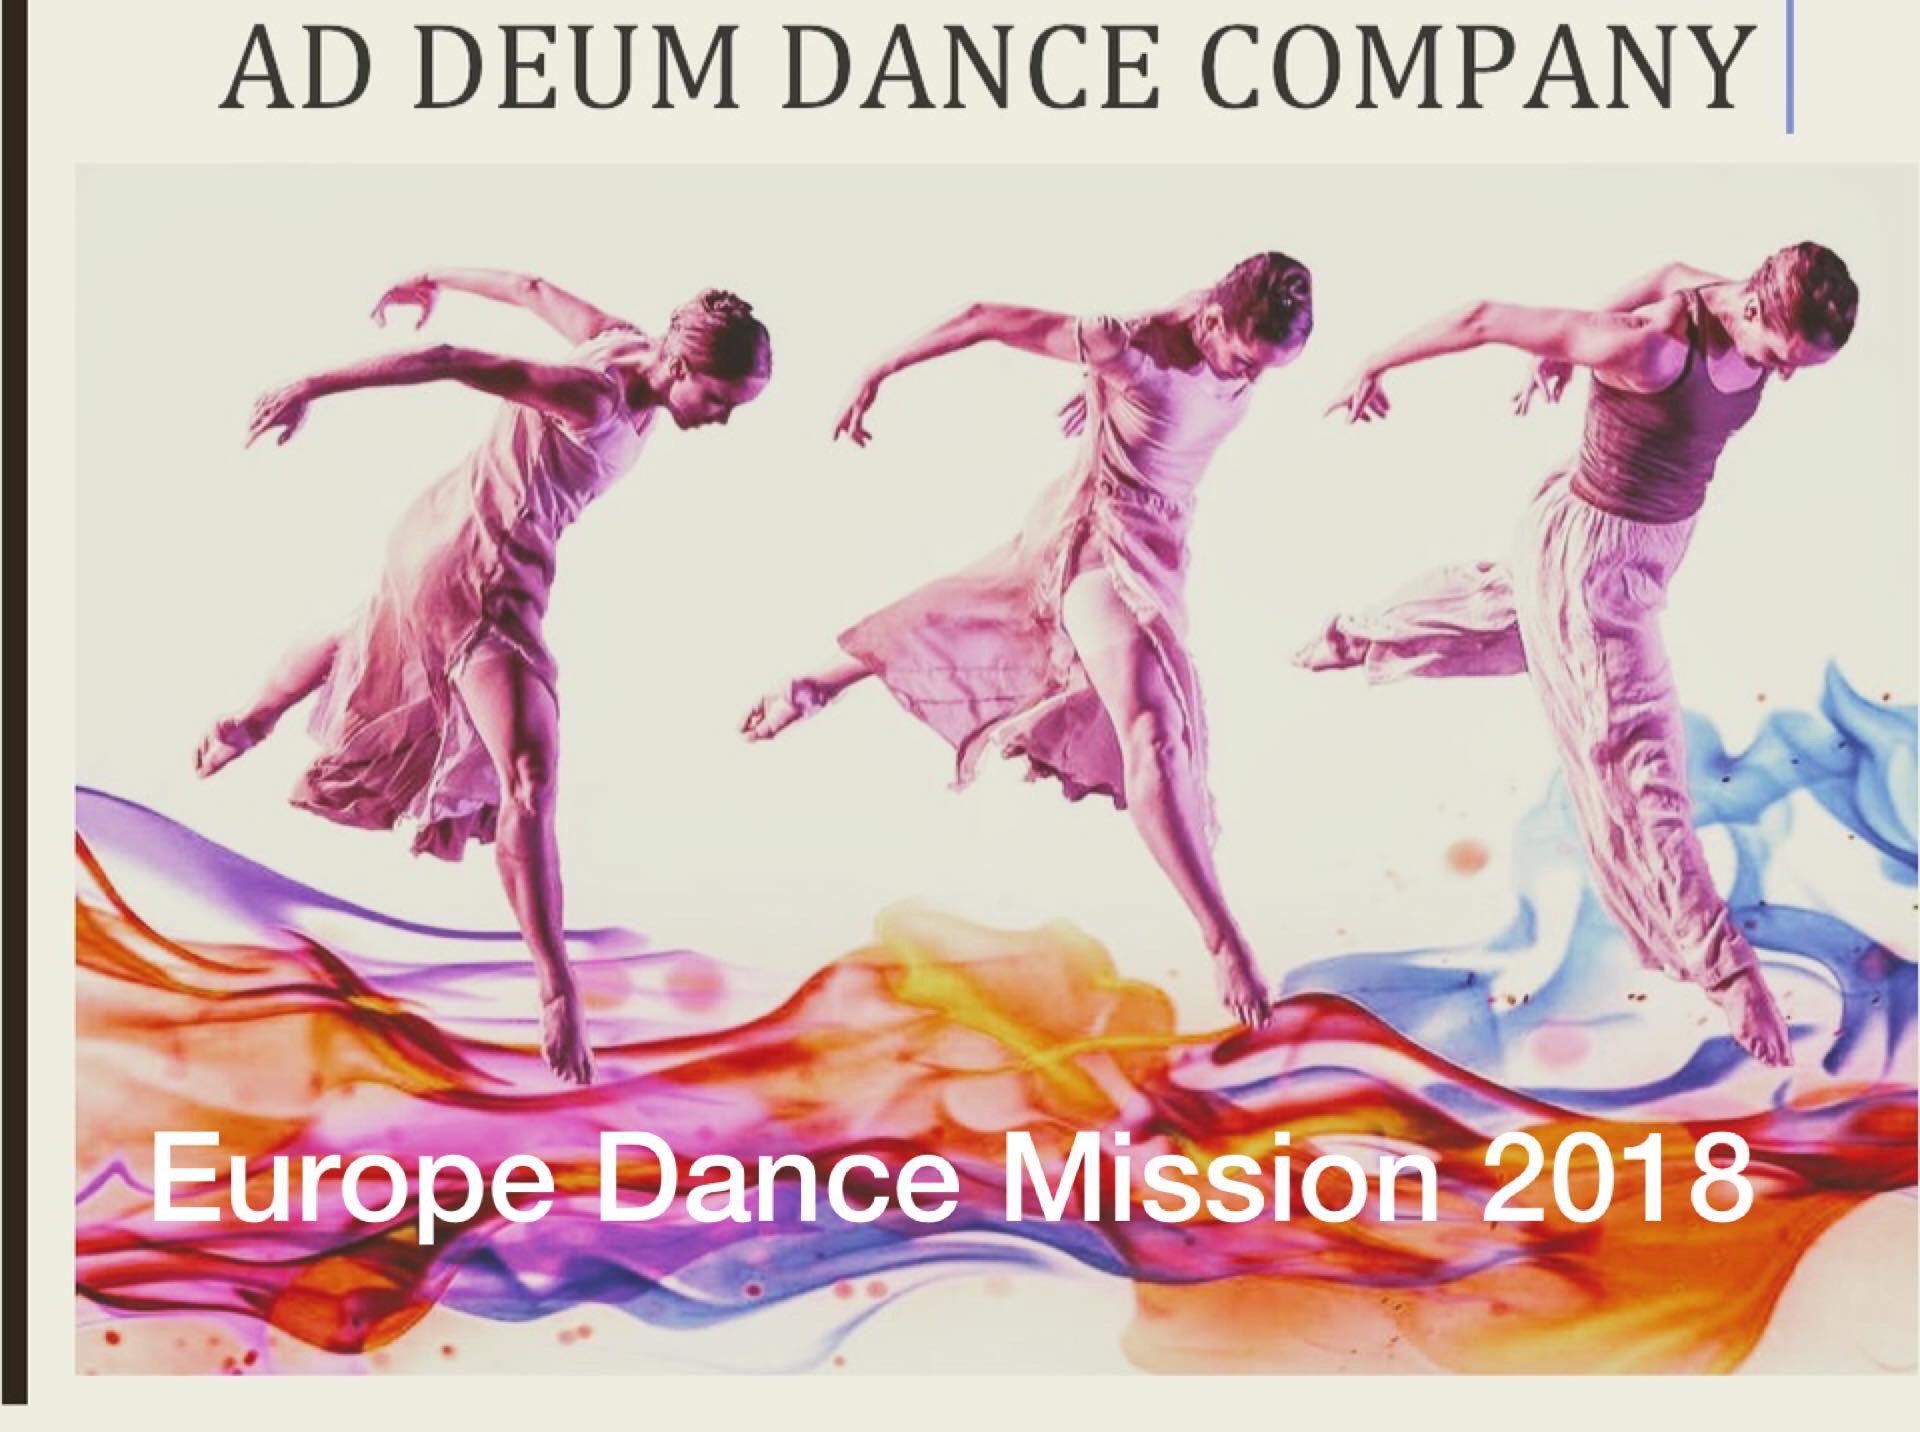 Europe Dance Mission 2018 flyer